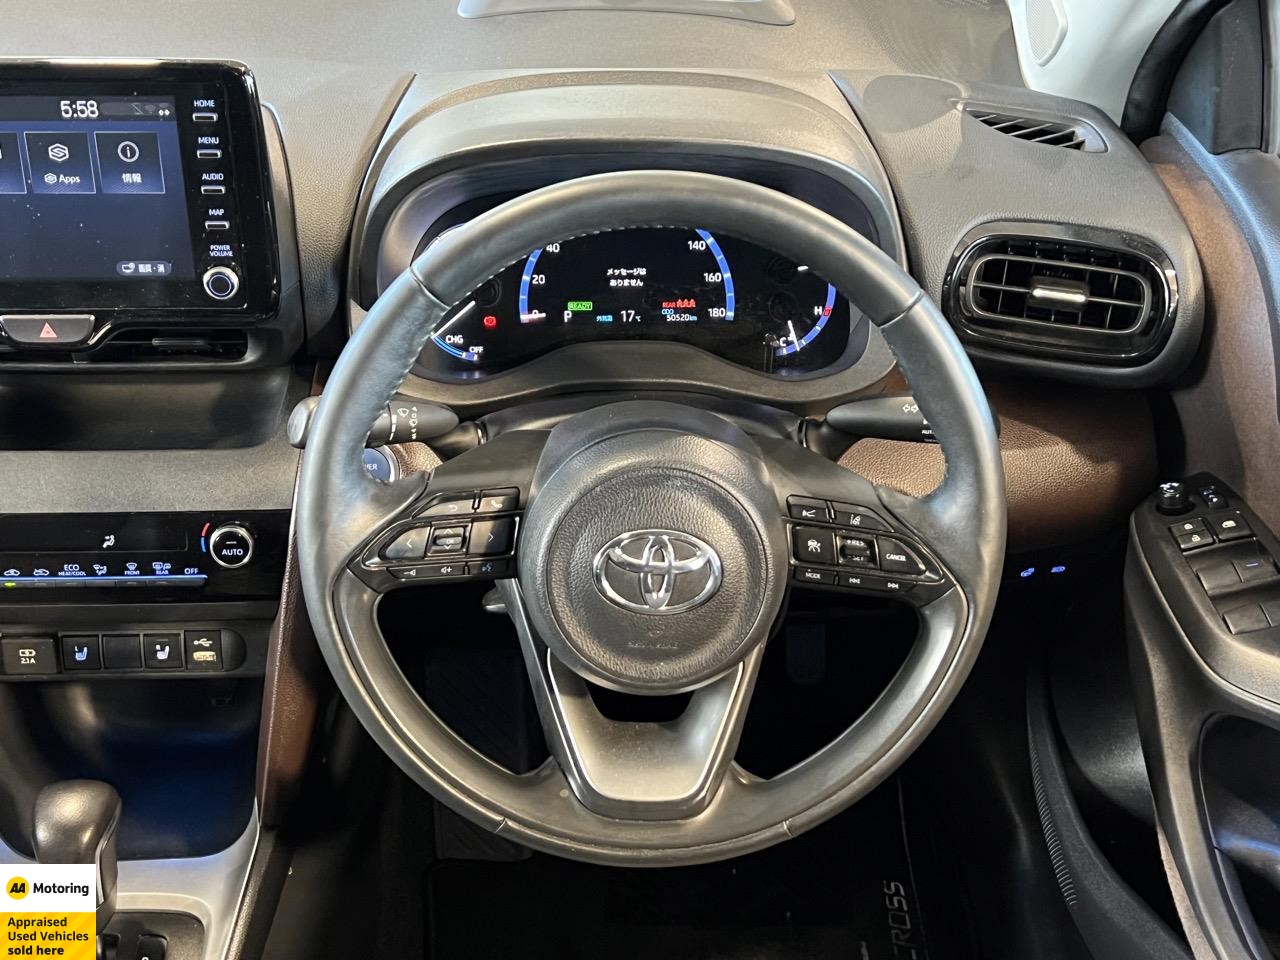 2020 Toyota Yaris